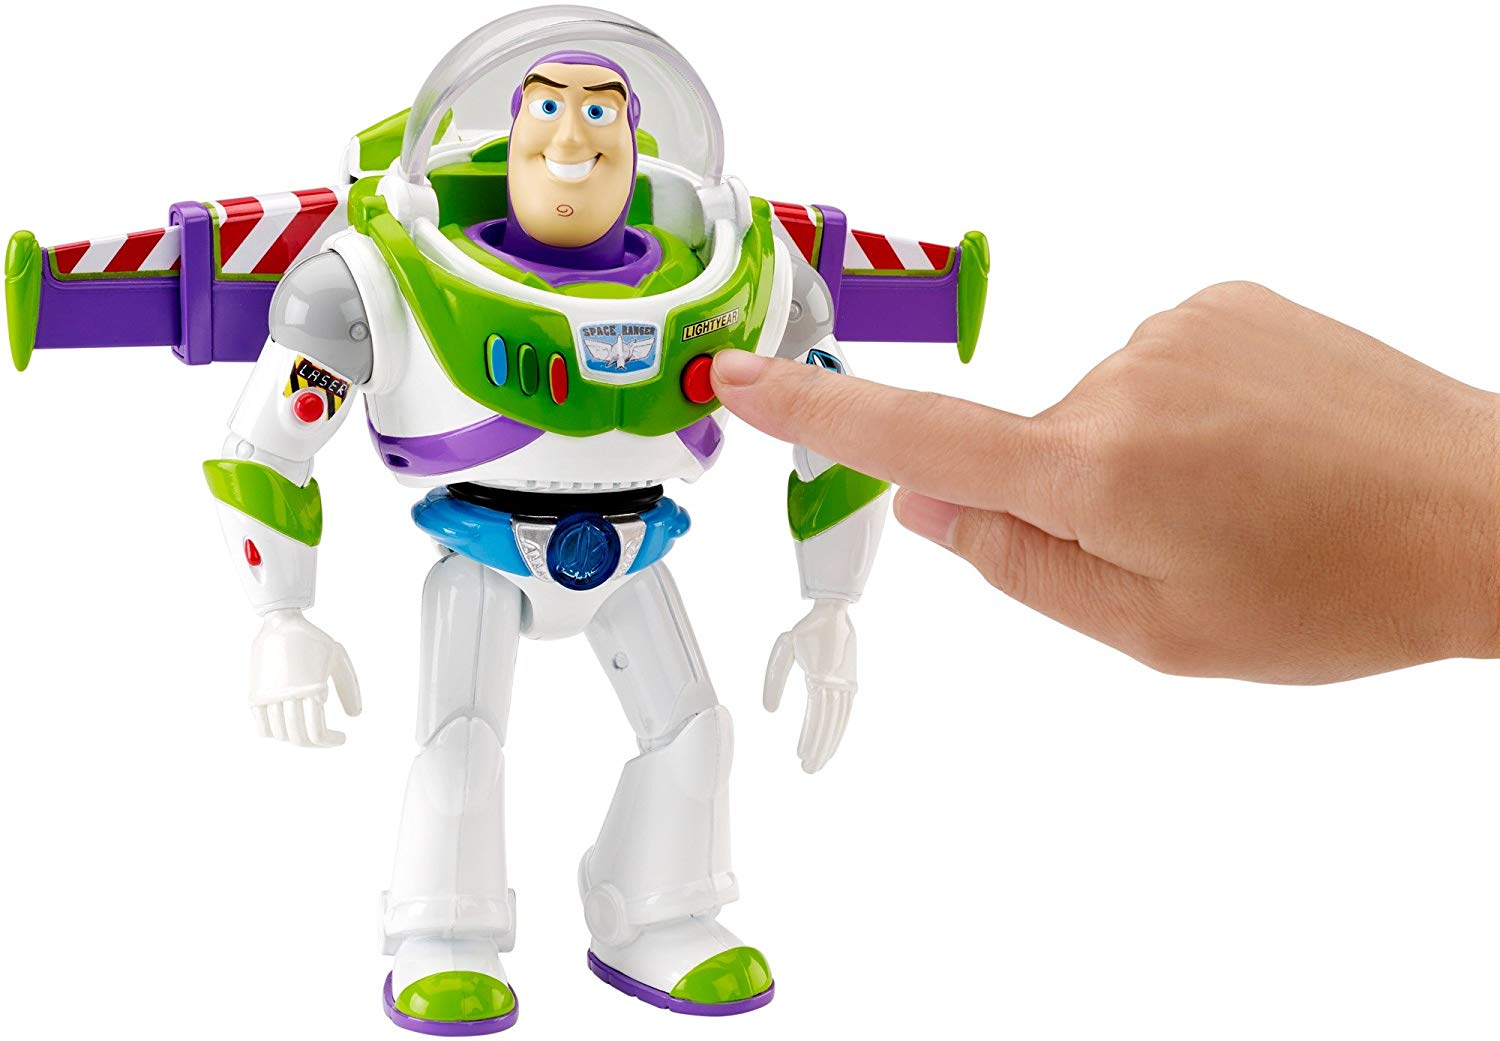 Buzz toy. История игрушек игрушки Базз Лайтер. Buzz Lightyear Space Ranger Toy. Базз Лайтер игрушка оригинал. Игрушка Базз Лайтер Делюкс.